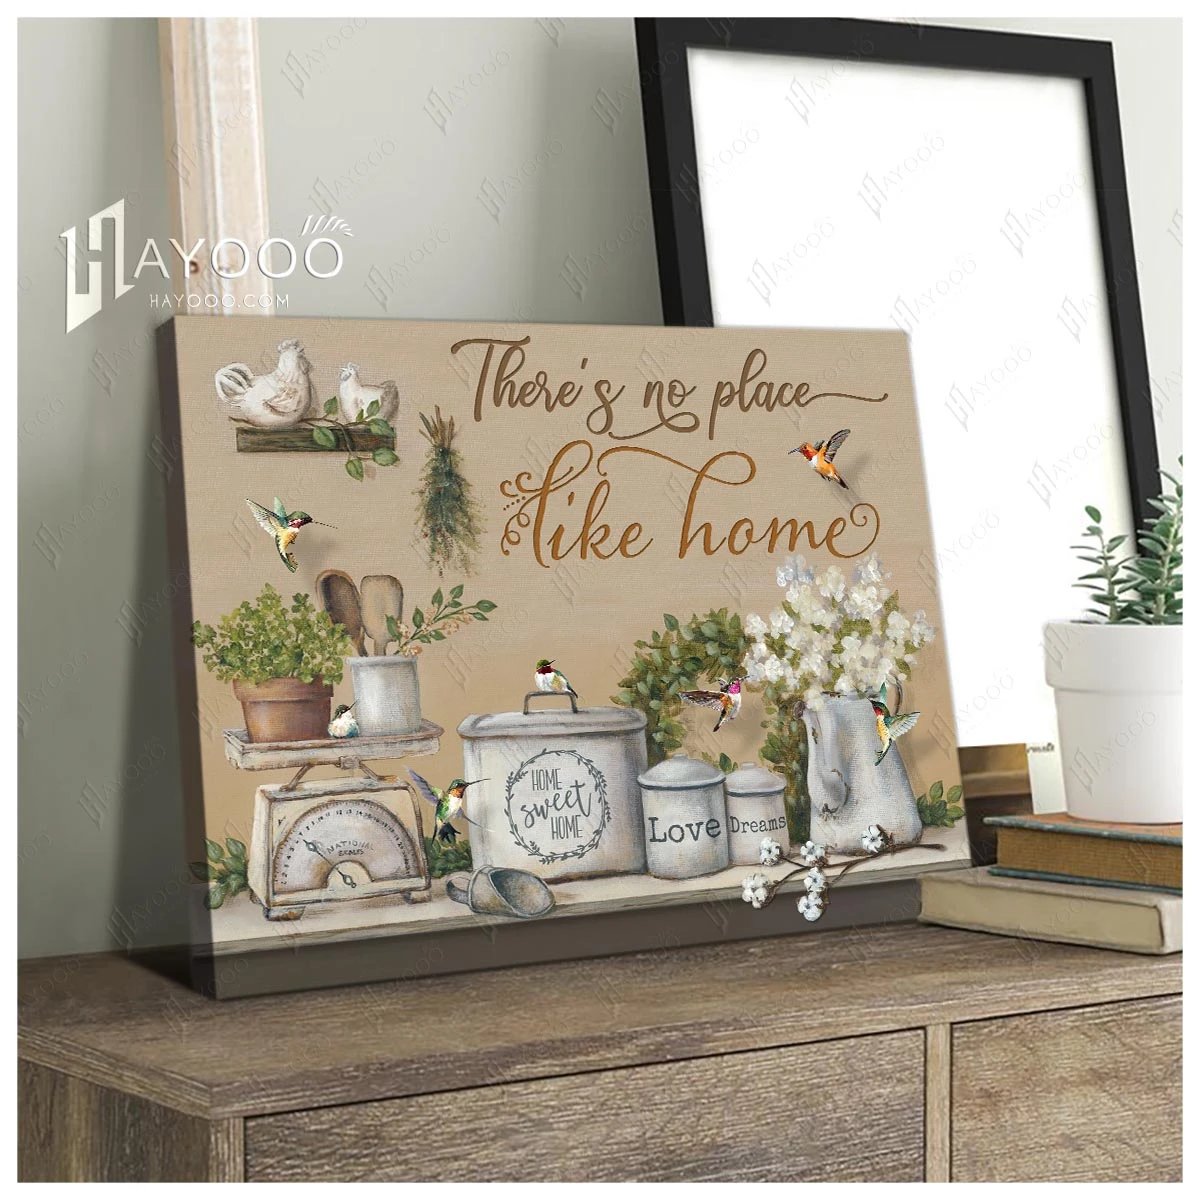 There's no place like home... 
The link:
hayooo.com/products/vinta…
#hayooo.com #hayoooshop #homedecor #canvas #canvaswallart #canvasdecor #newdecor #hummingbirds #vintagefarmhouse